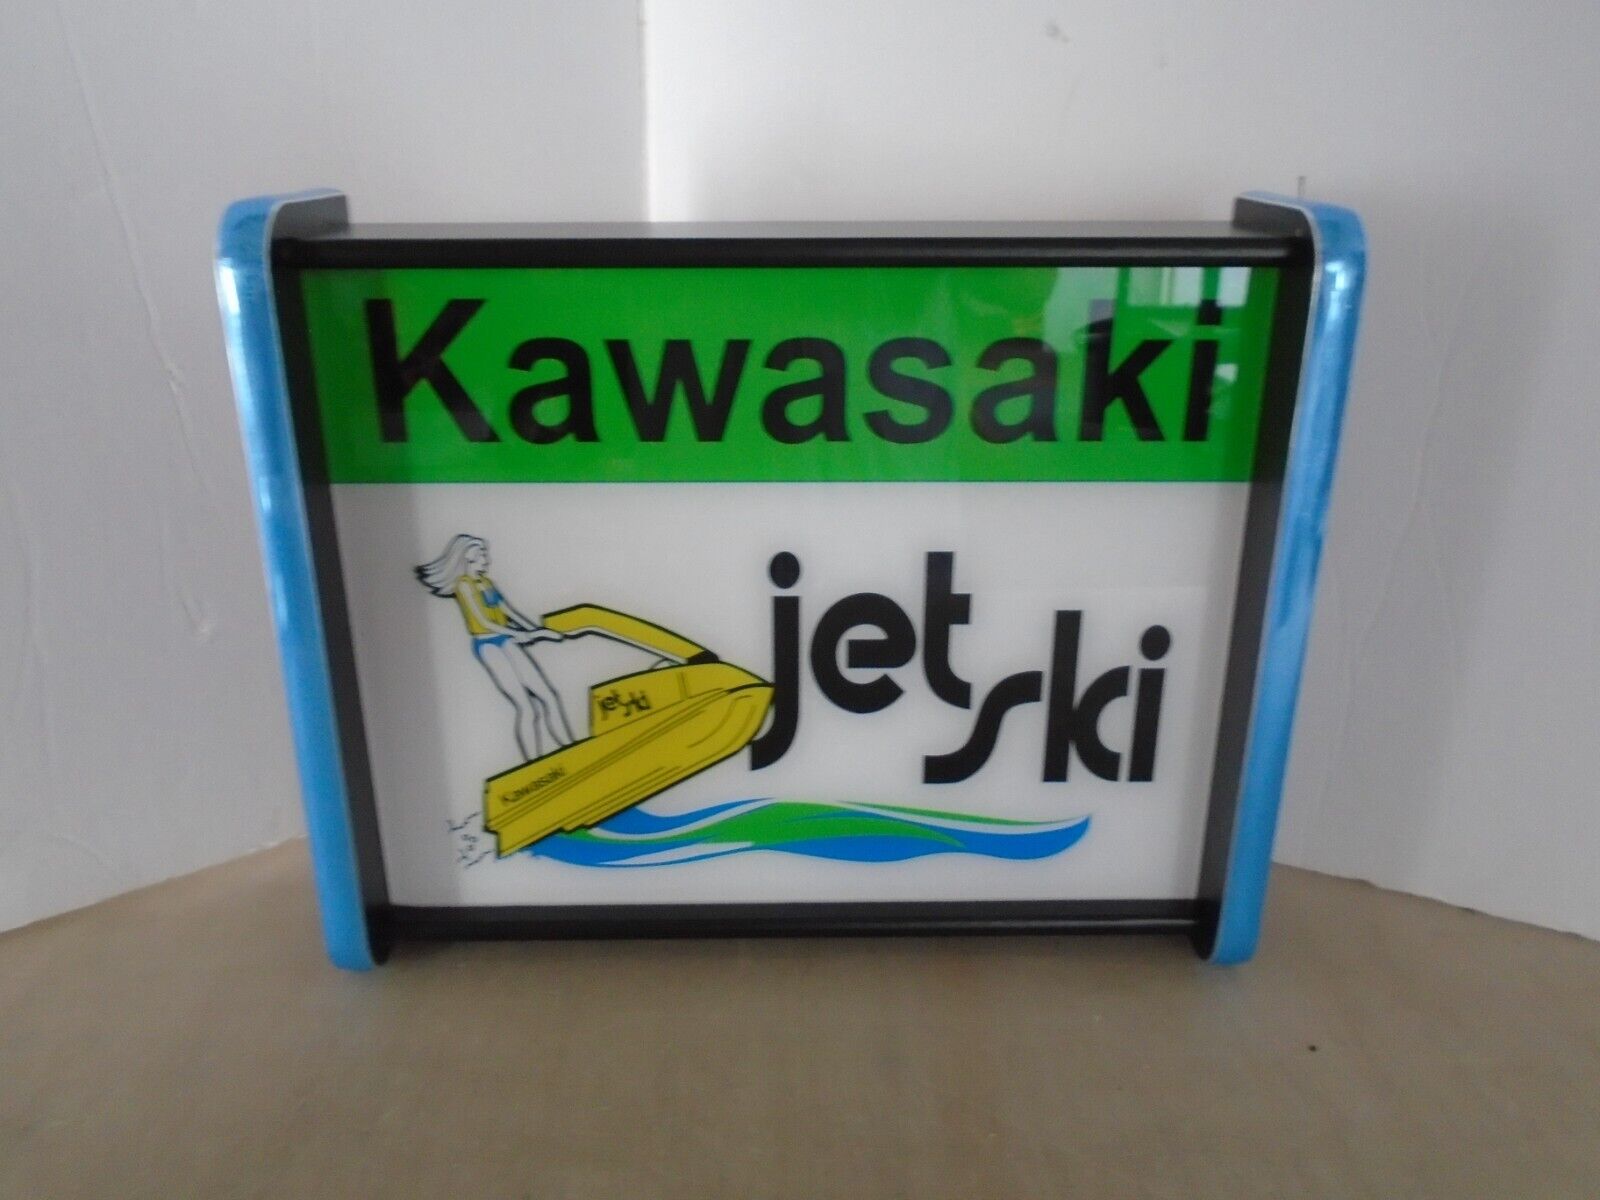 Kawasaki Jet Ski LED Display light up sign box